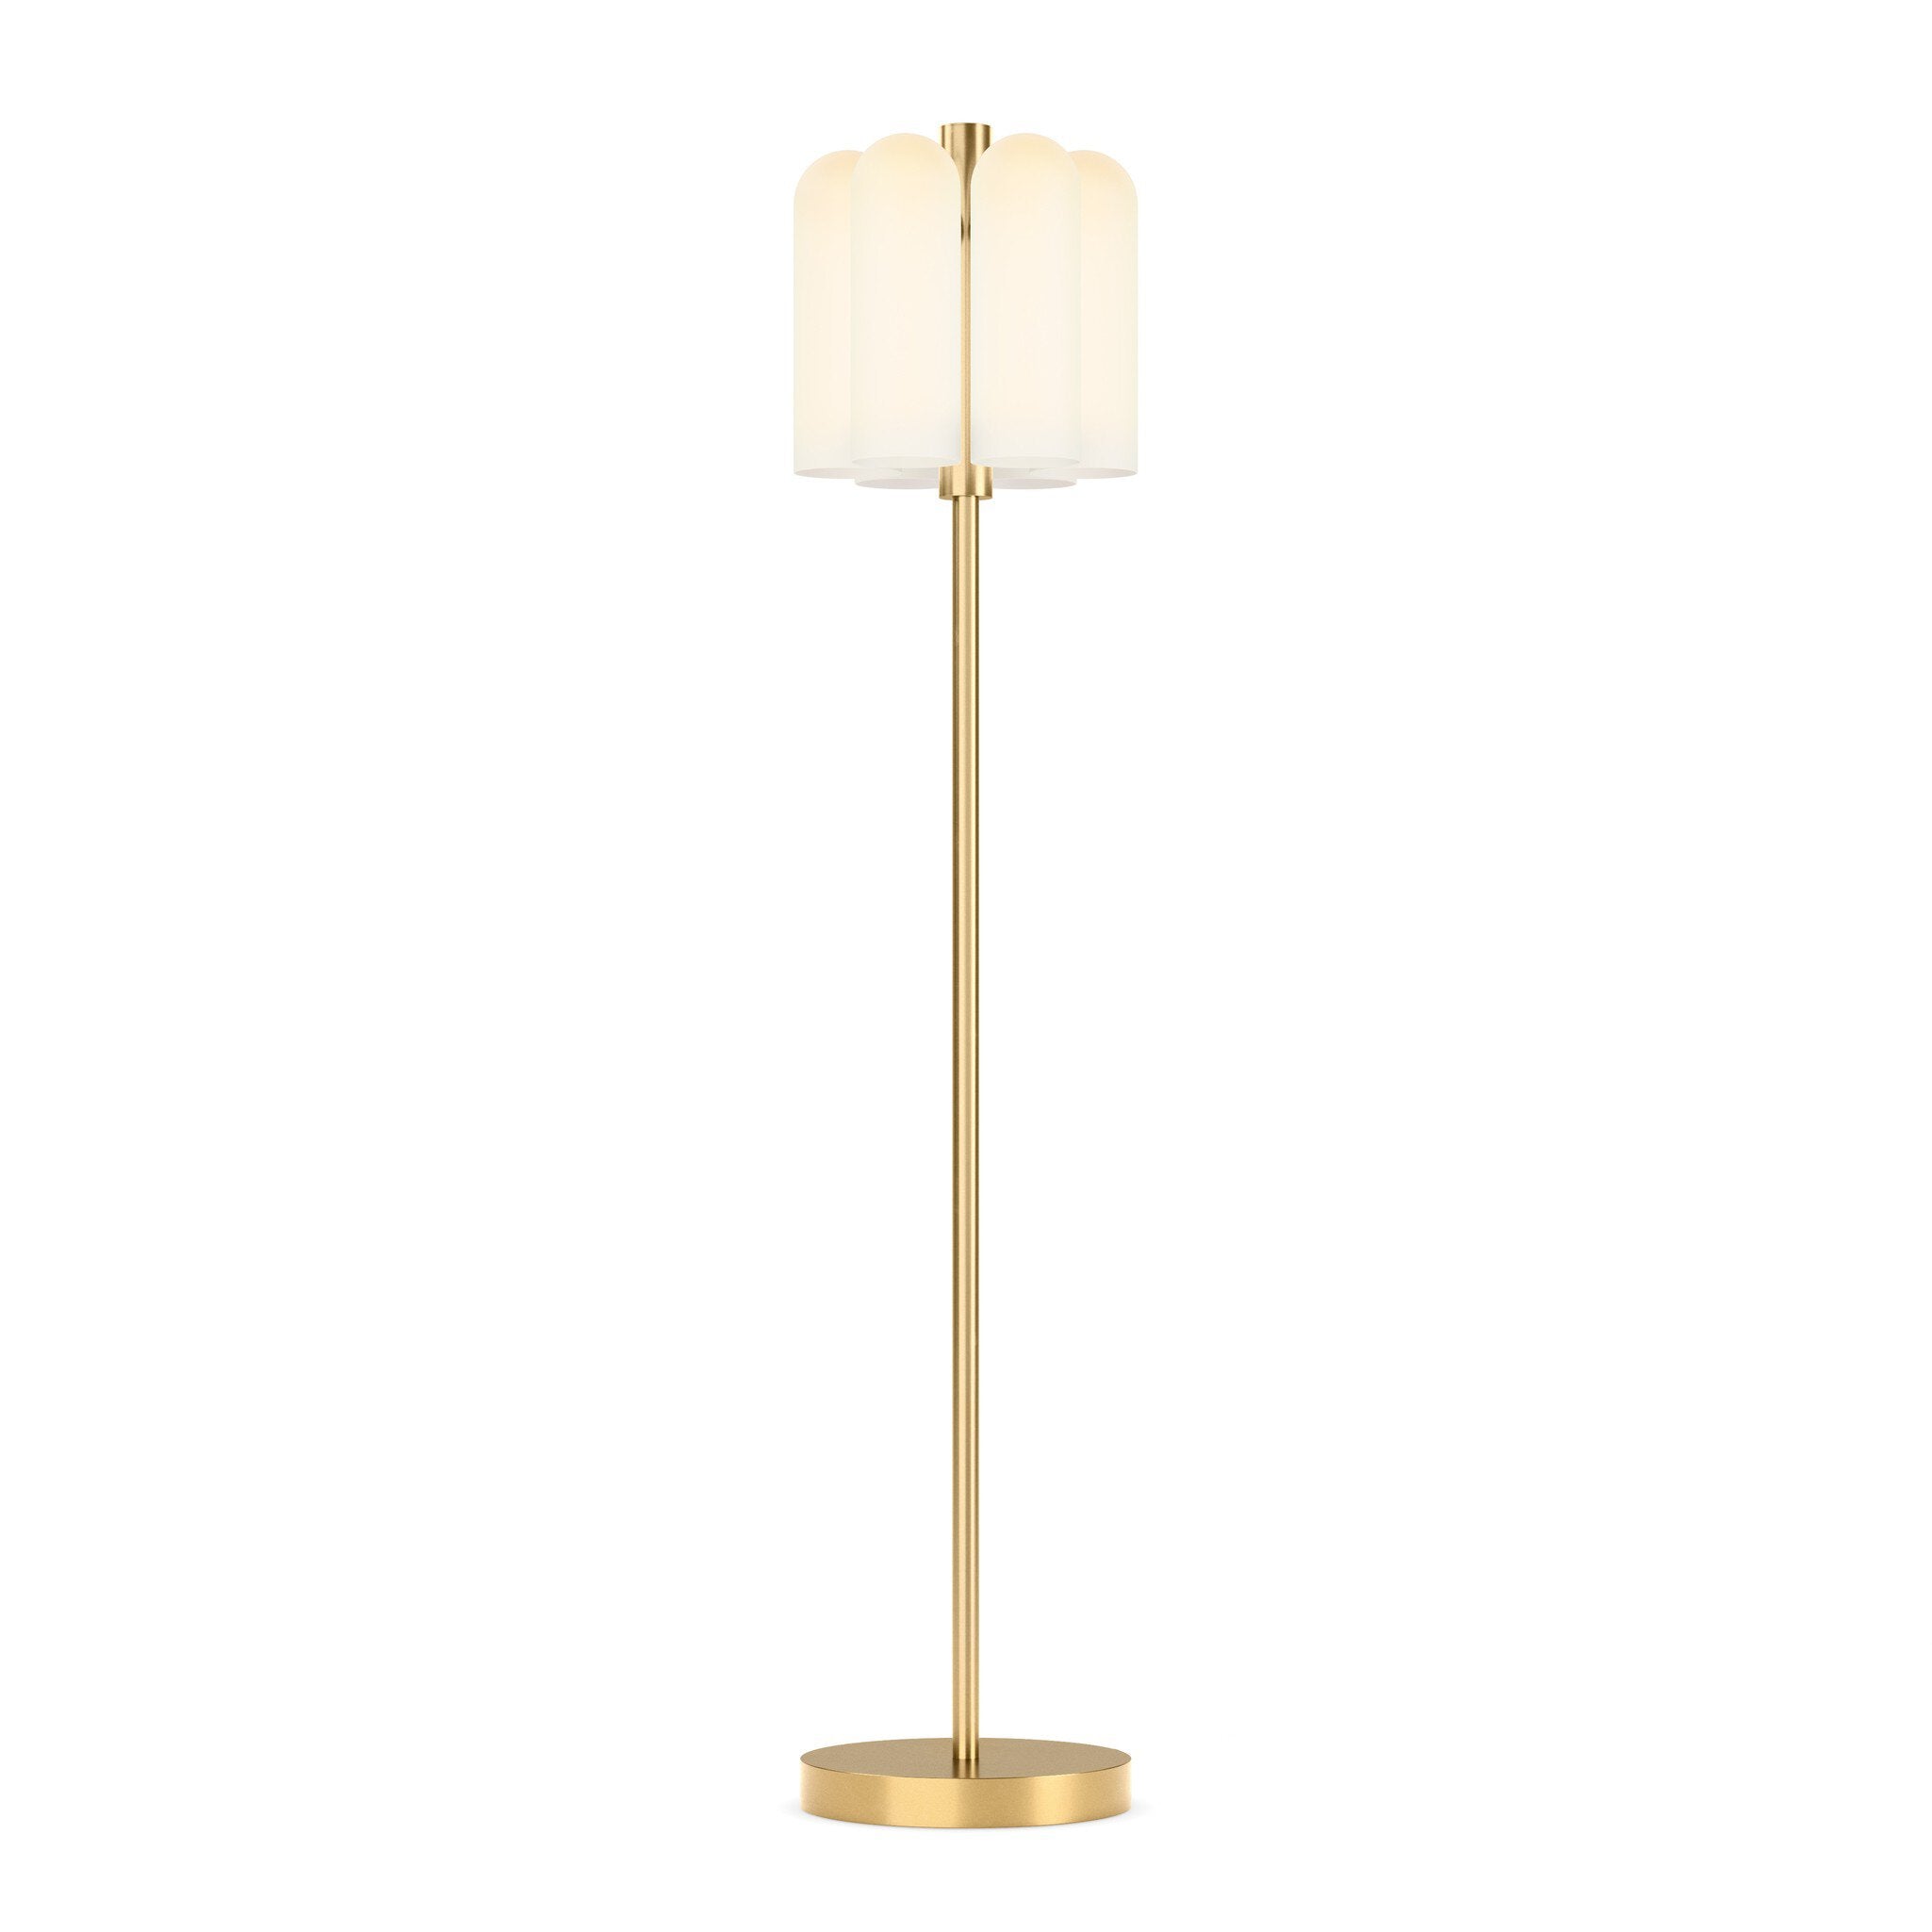 Odyssey 6 Floor Lamp - Burnished Brass